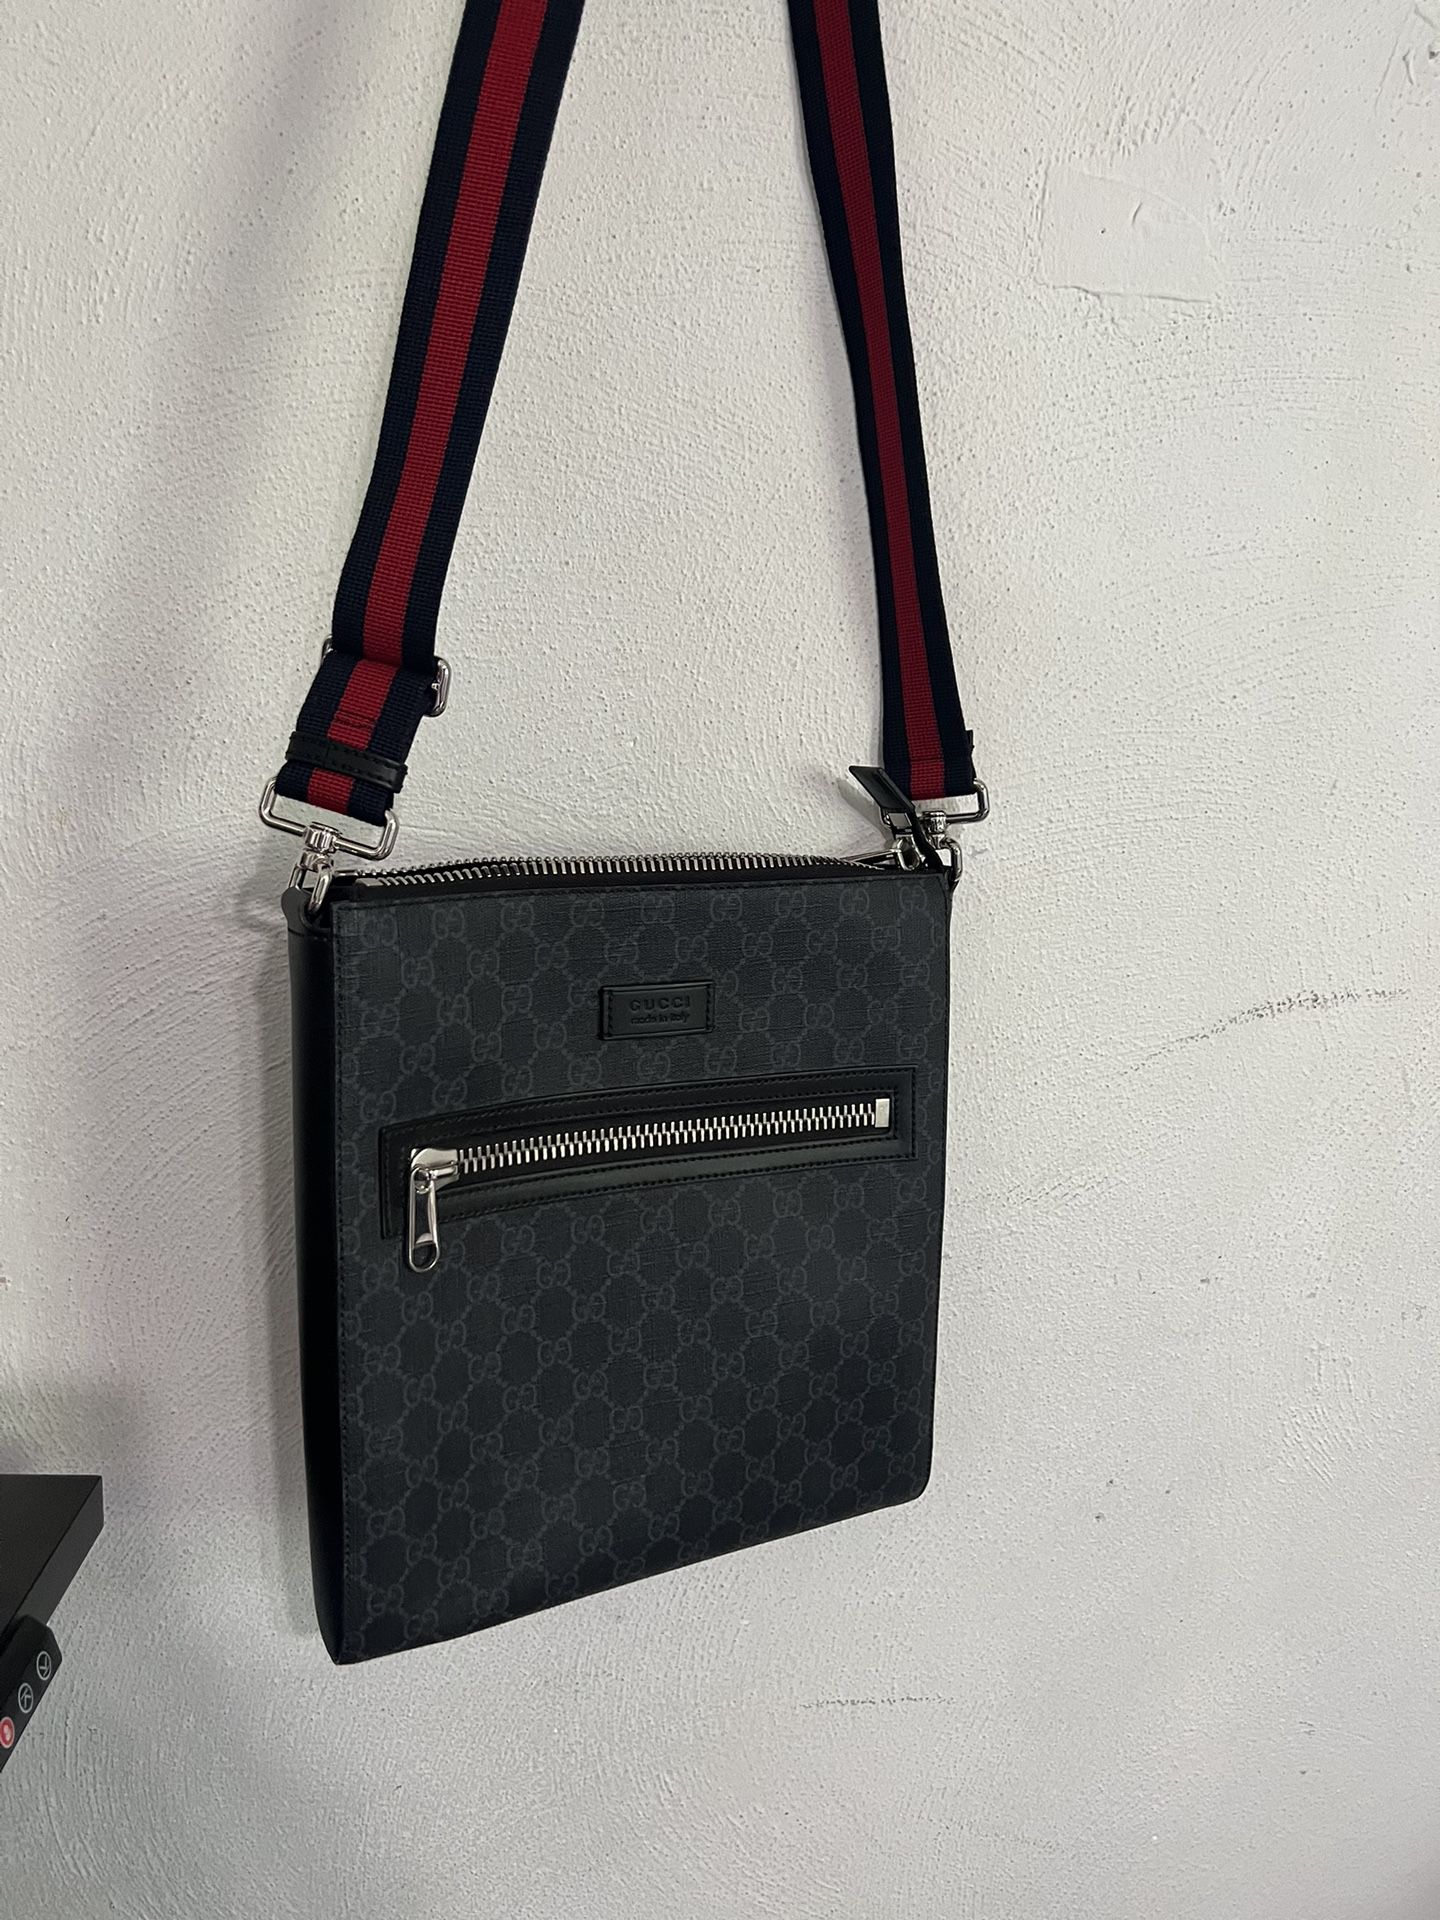 Men’s Gucci messenger Bag FULL SIZE